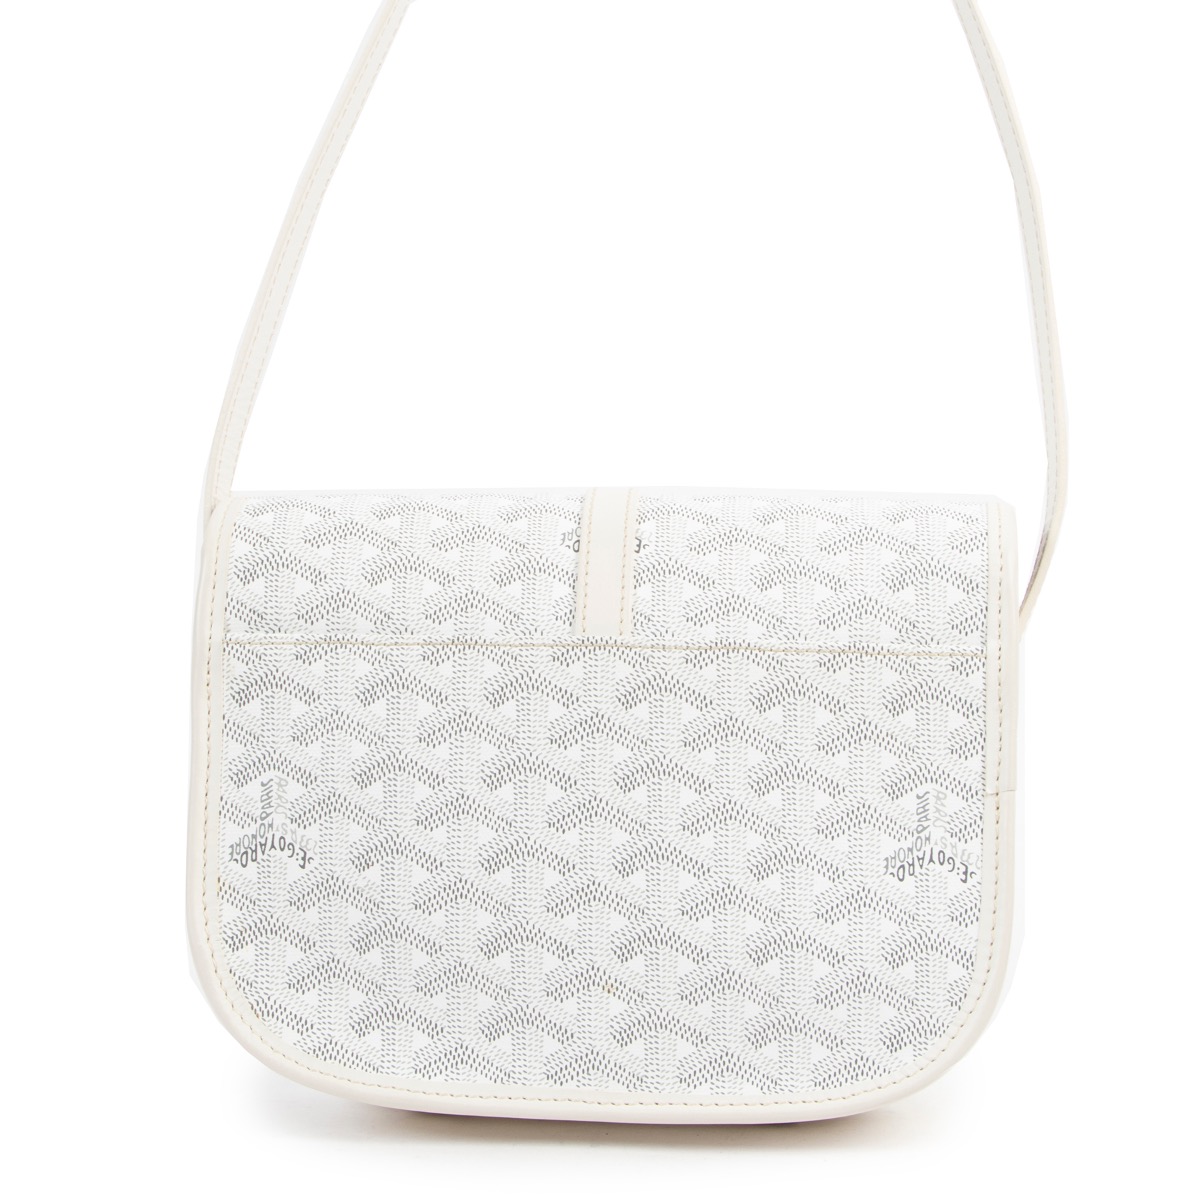 Belvedère leather handbag Goyard White in Leather - 29554968